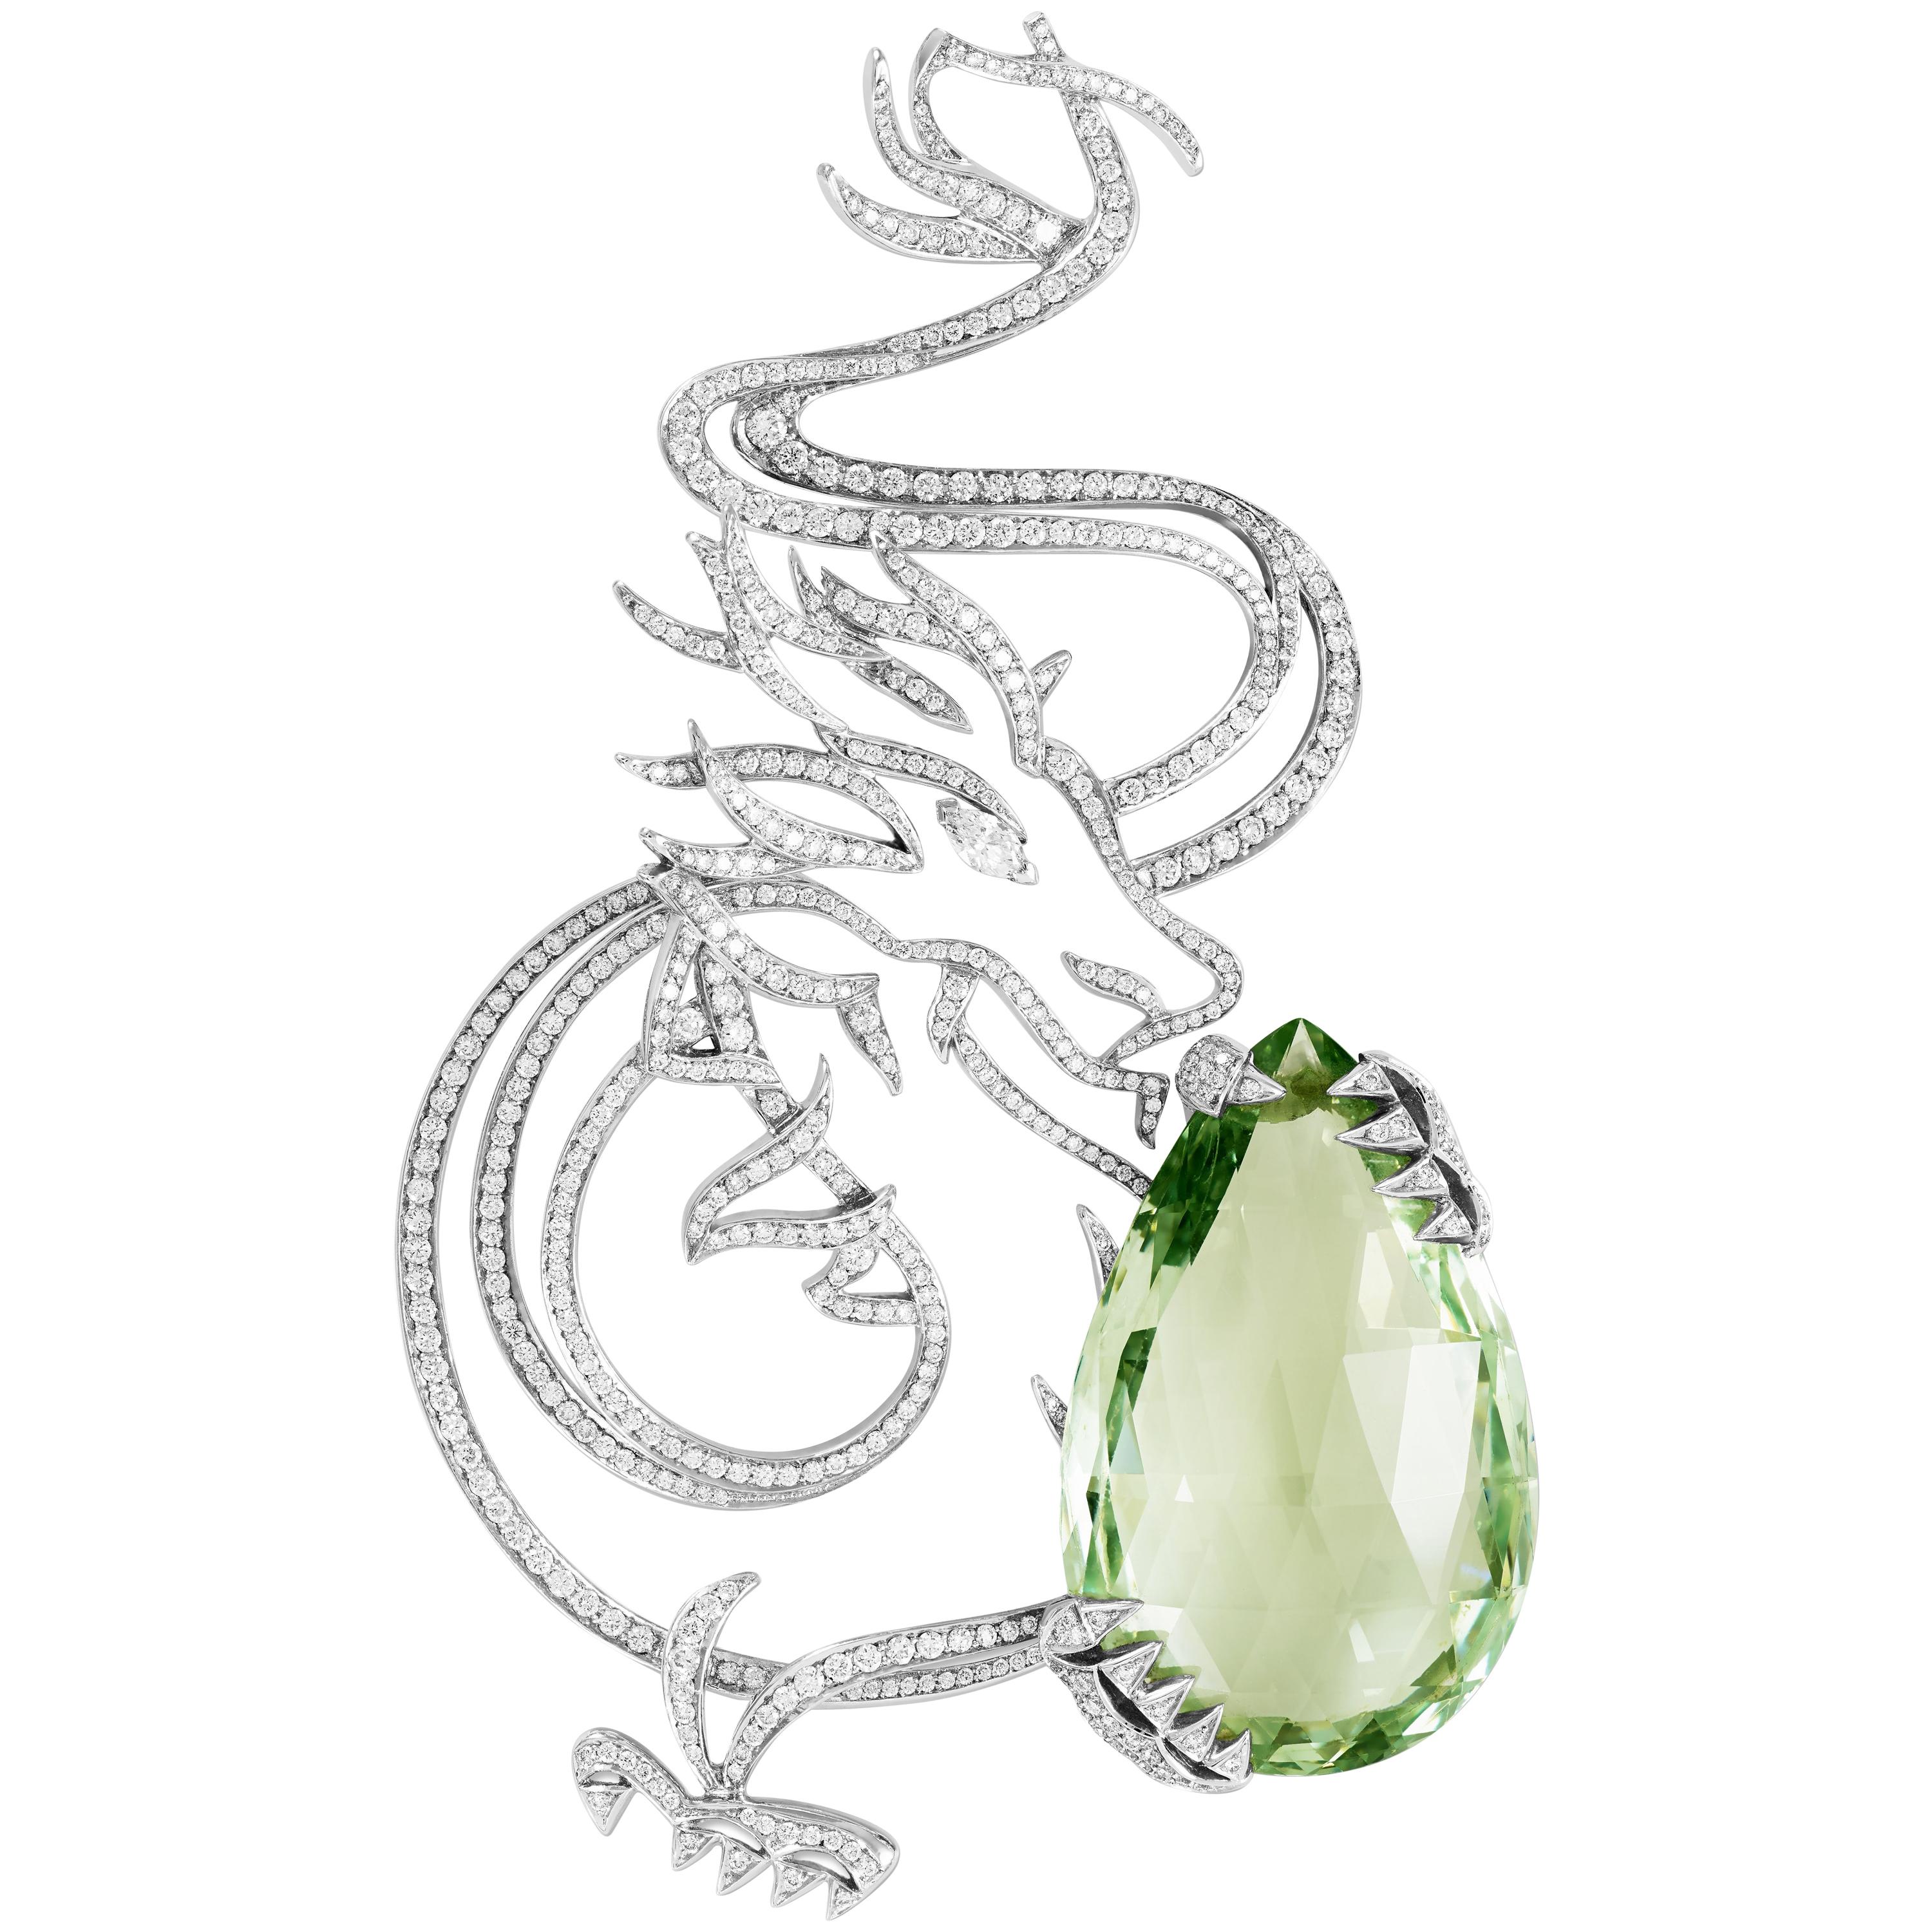 Lorenz Bäumer 55 Carat Green Beryl Diamonds Dragon Brooch For Sale